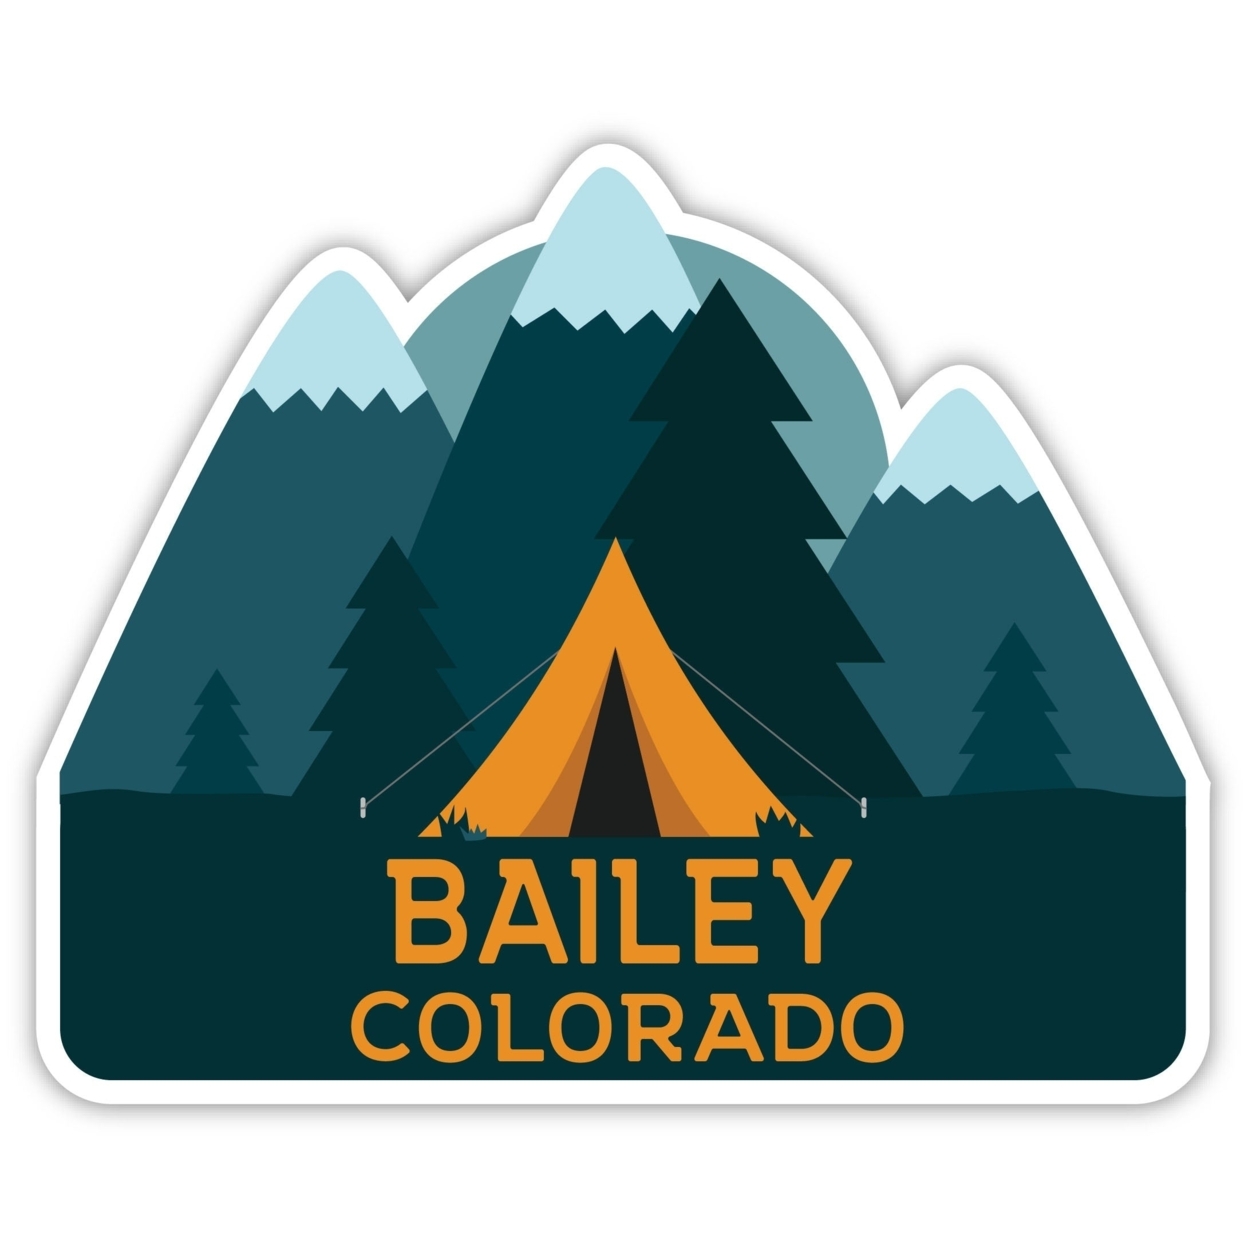 Bailey Colorado Souvenir Decorative Stickers (Choose Theme And Size) - Single Unit, 4-Inch, Adventures Awaits